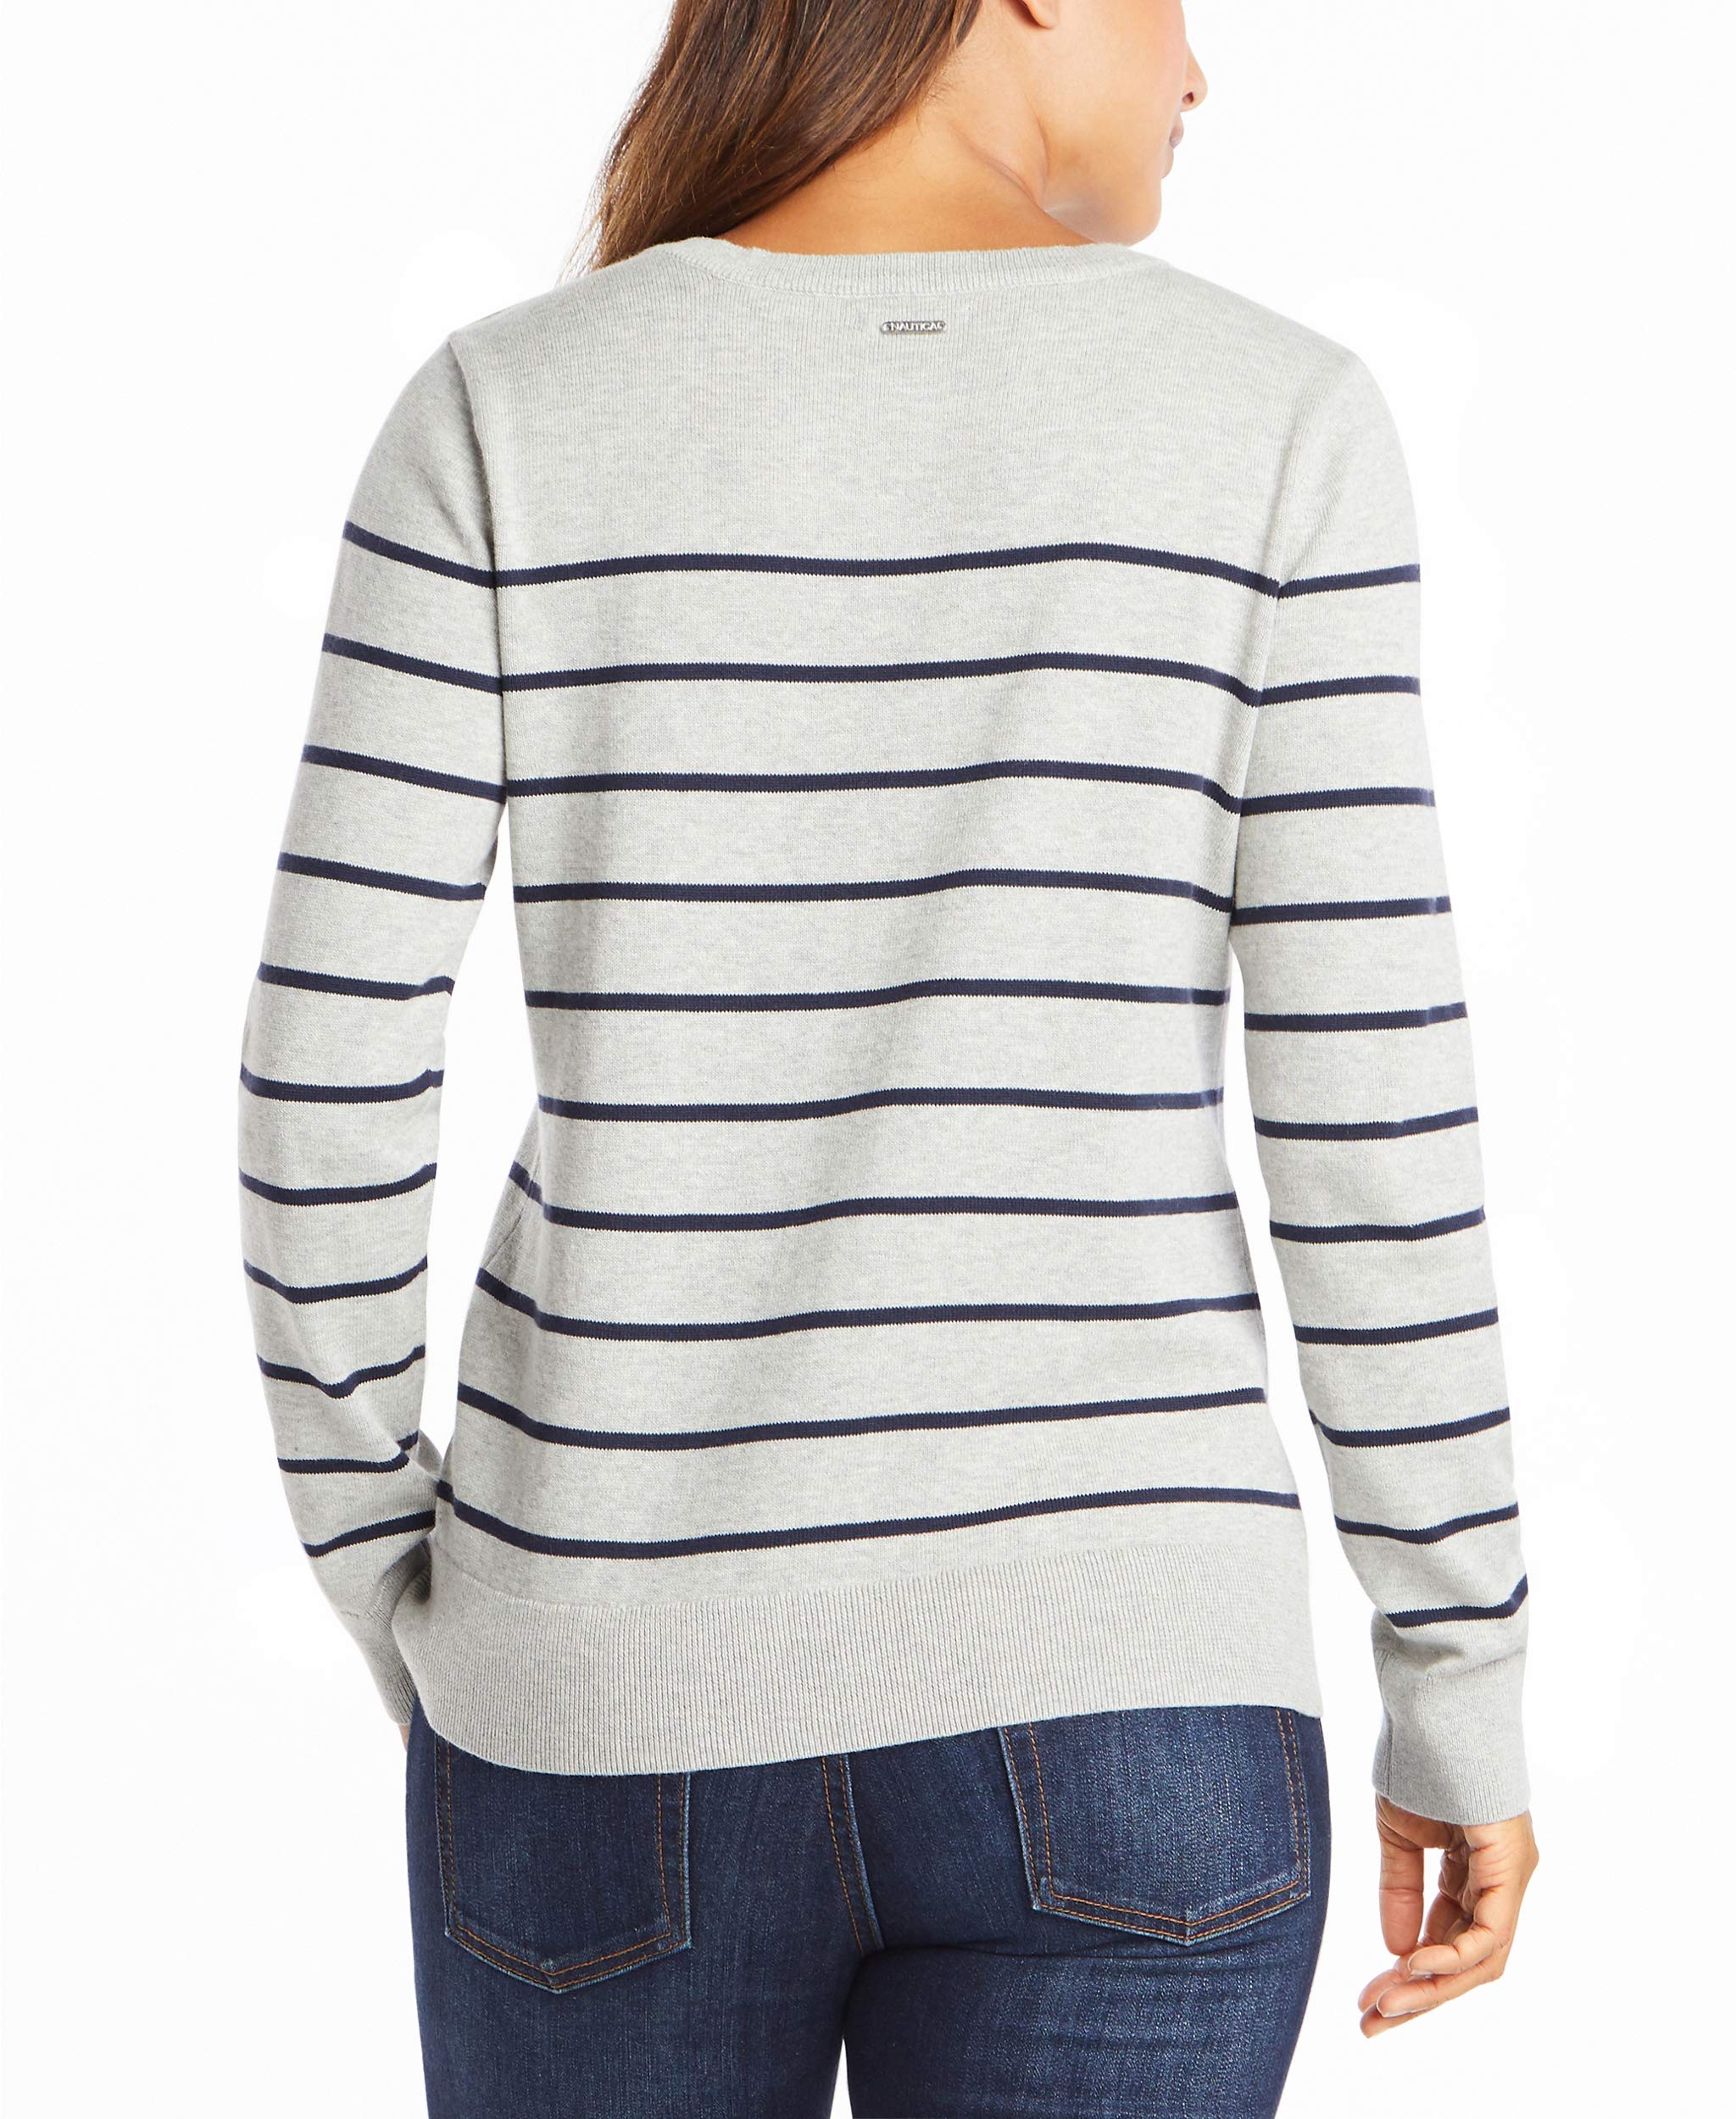 Nautica Women's Year-Round Long Sleeve 100% Cotton Striped Crewneck Sweater